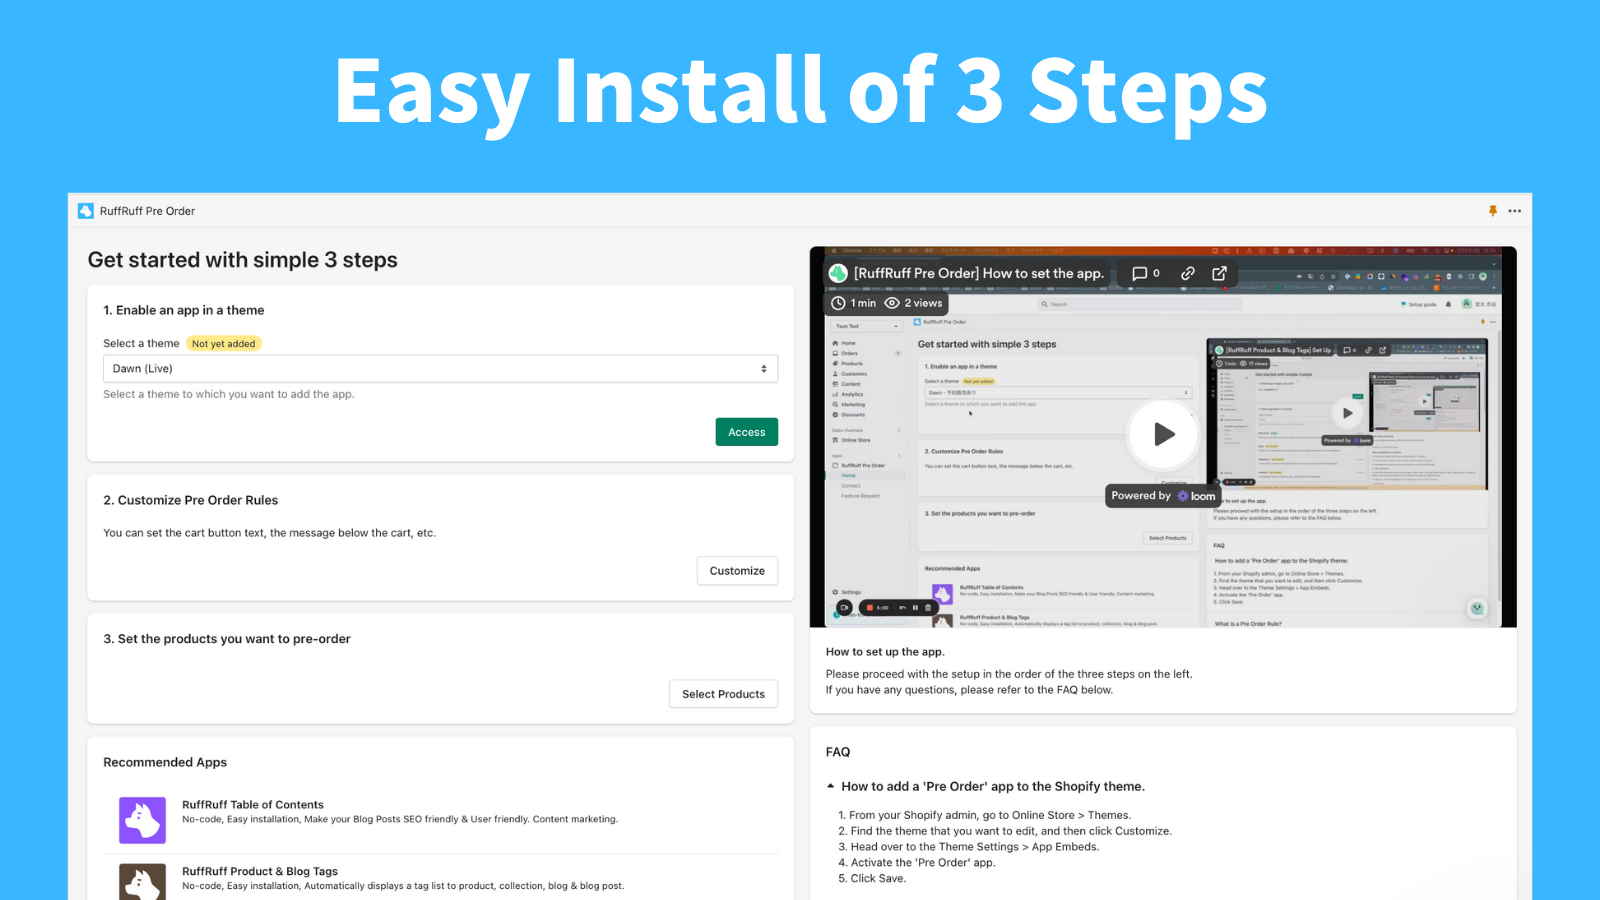 Easy Install of 3 Steps